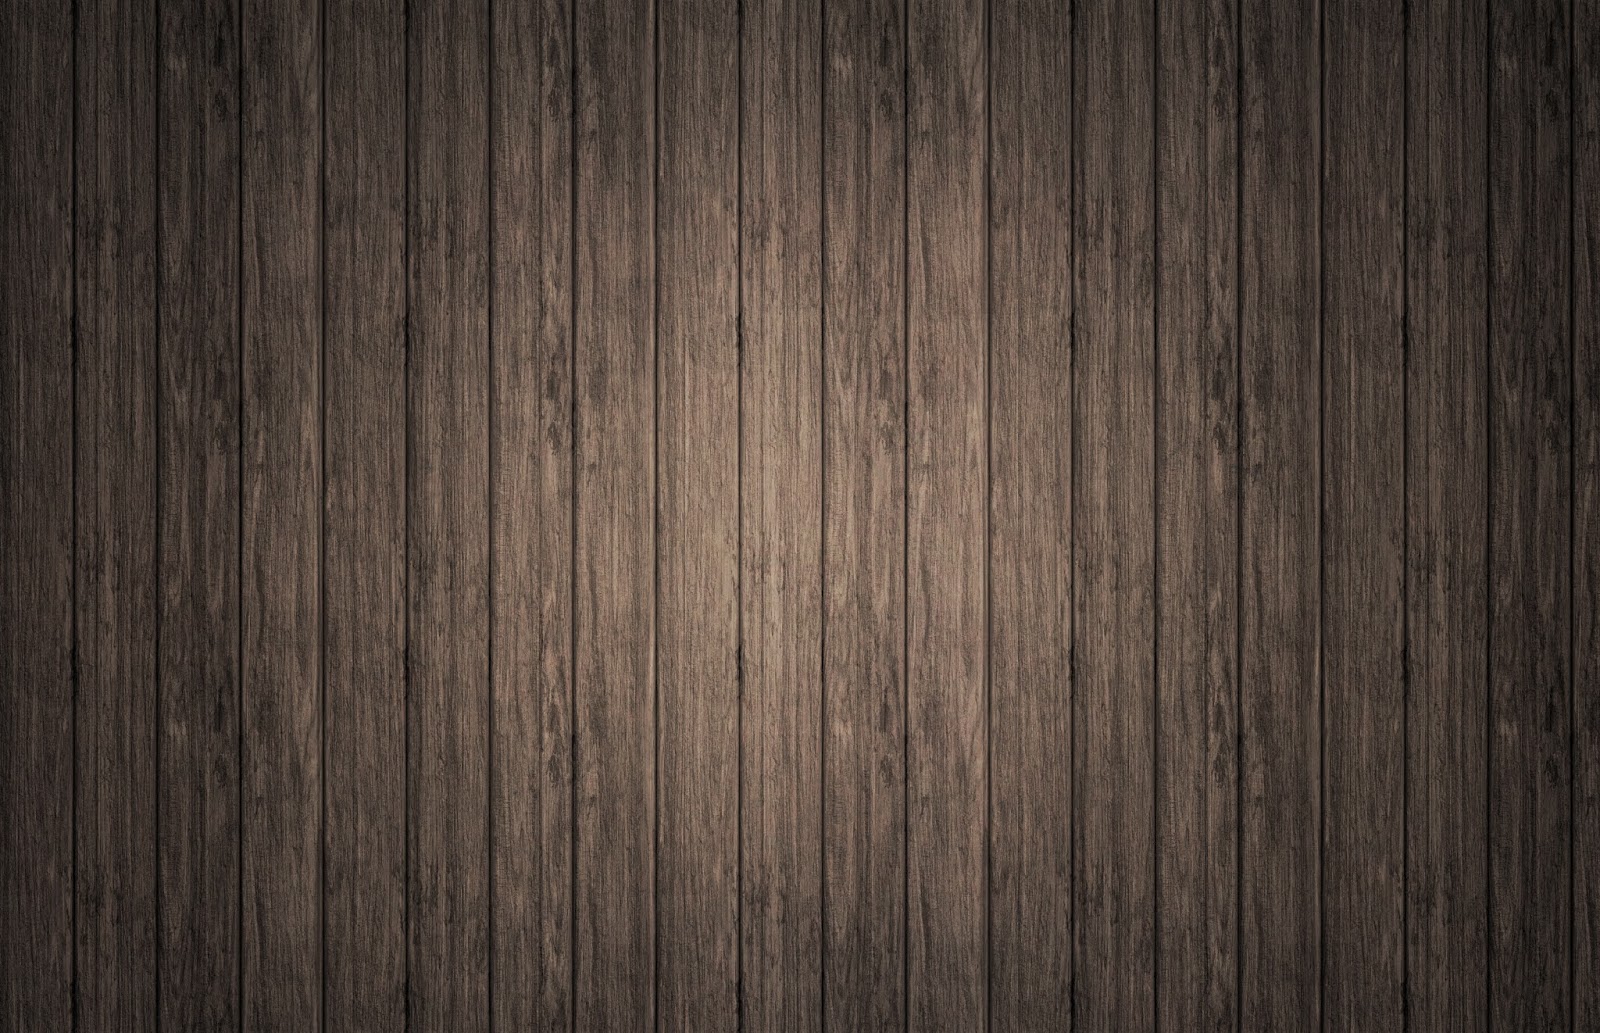 Desktop Pc Wooden Background Texture Pattern Image For Website HD